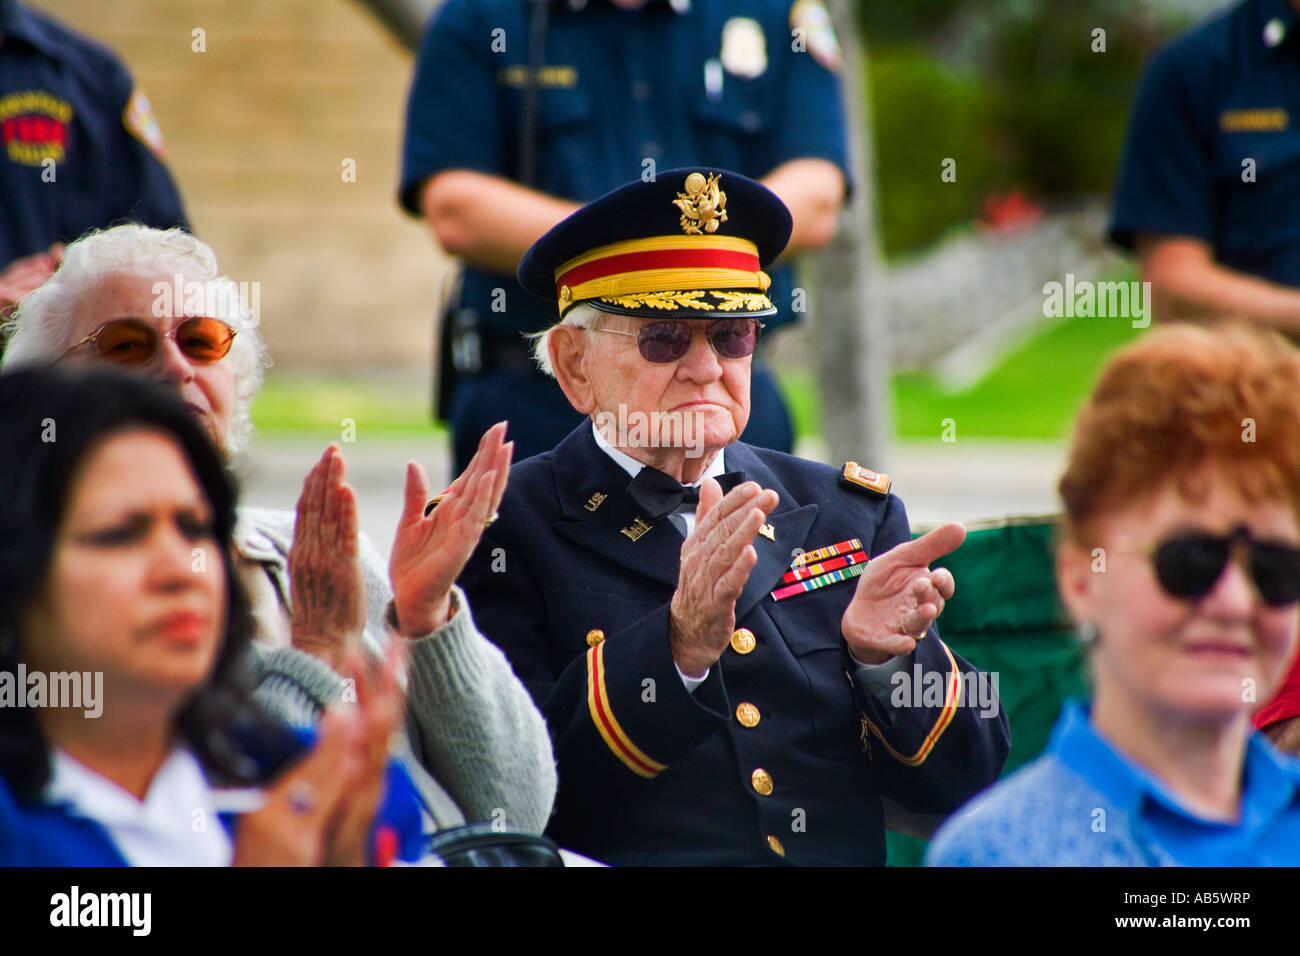 A World War II veteran in full dress uniform attends Memorial Day ceremonies at a war memorial park in Fountain Valley CA Stock Photo